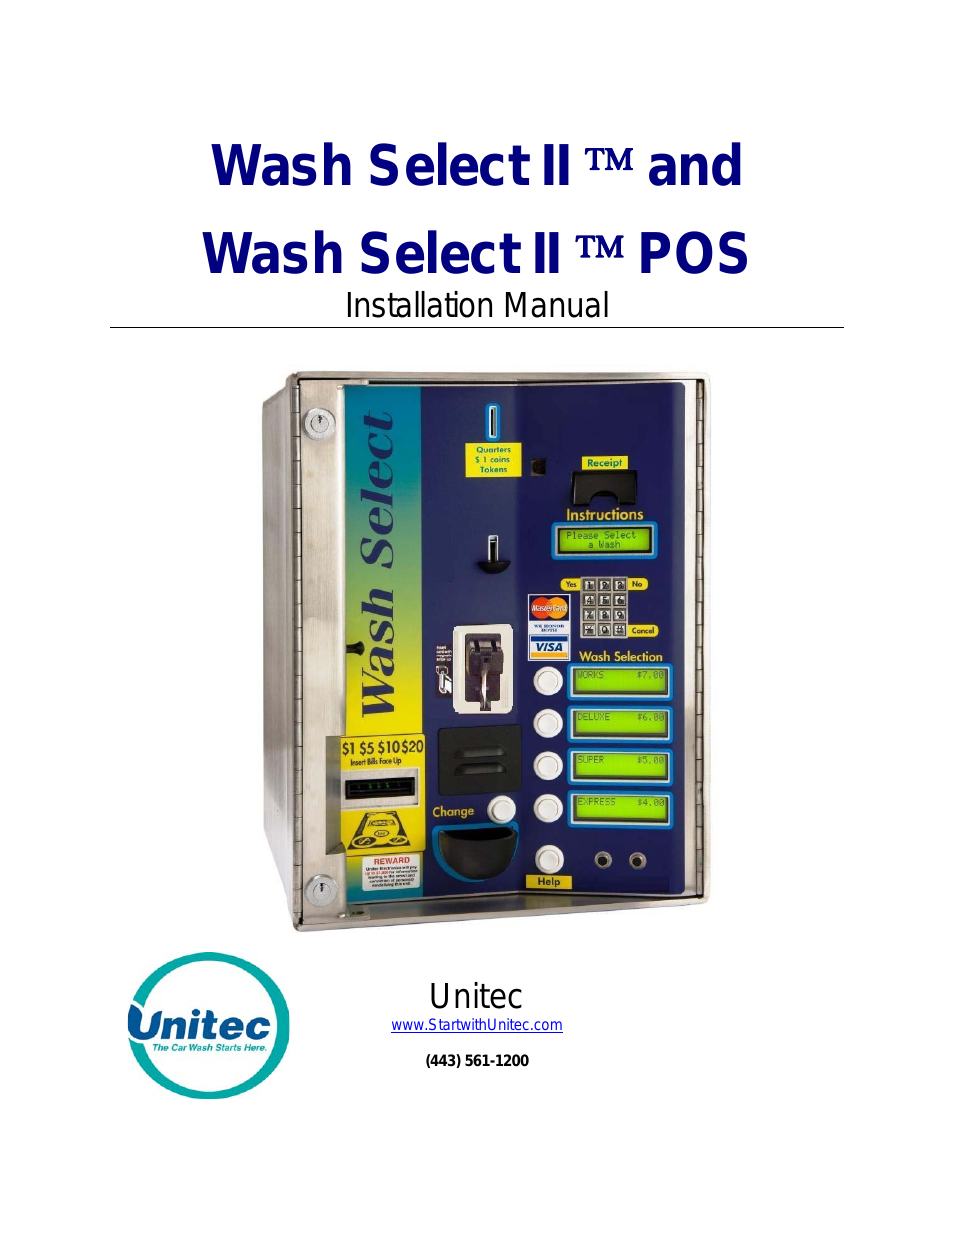 Wash Select II Installation Manual